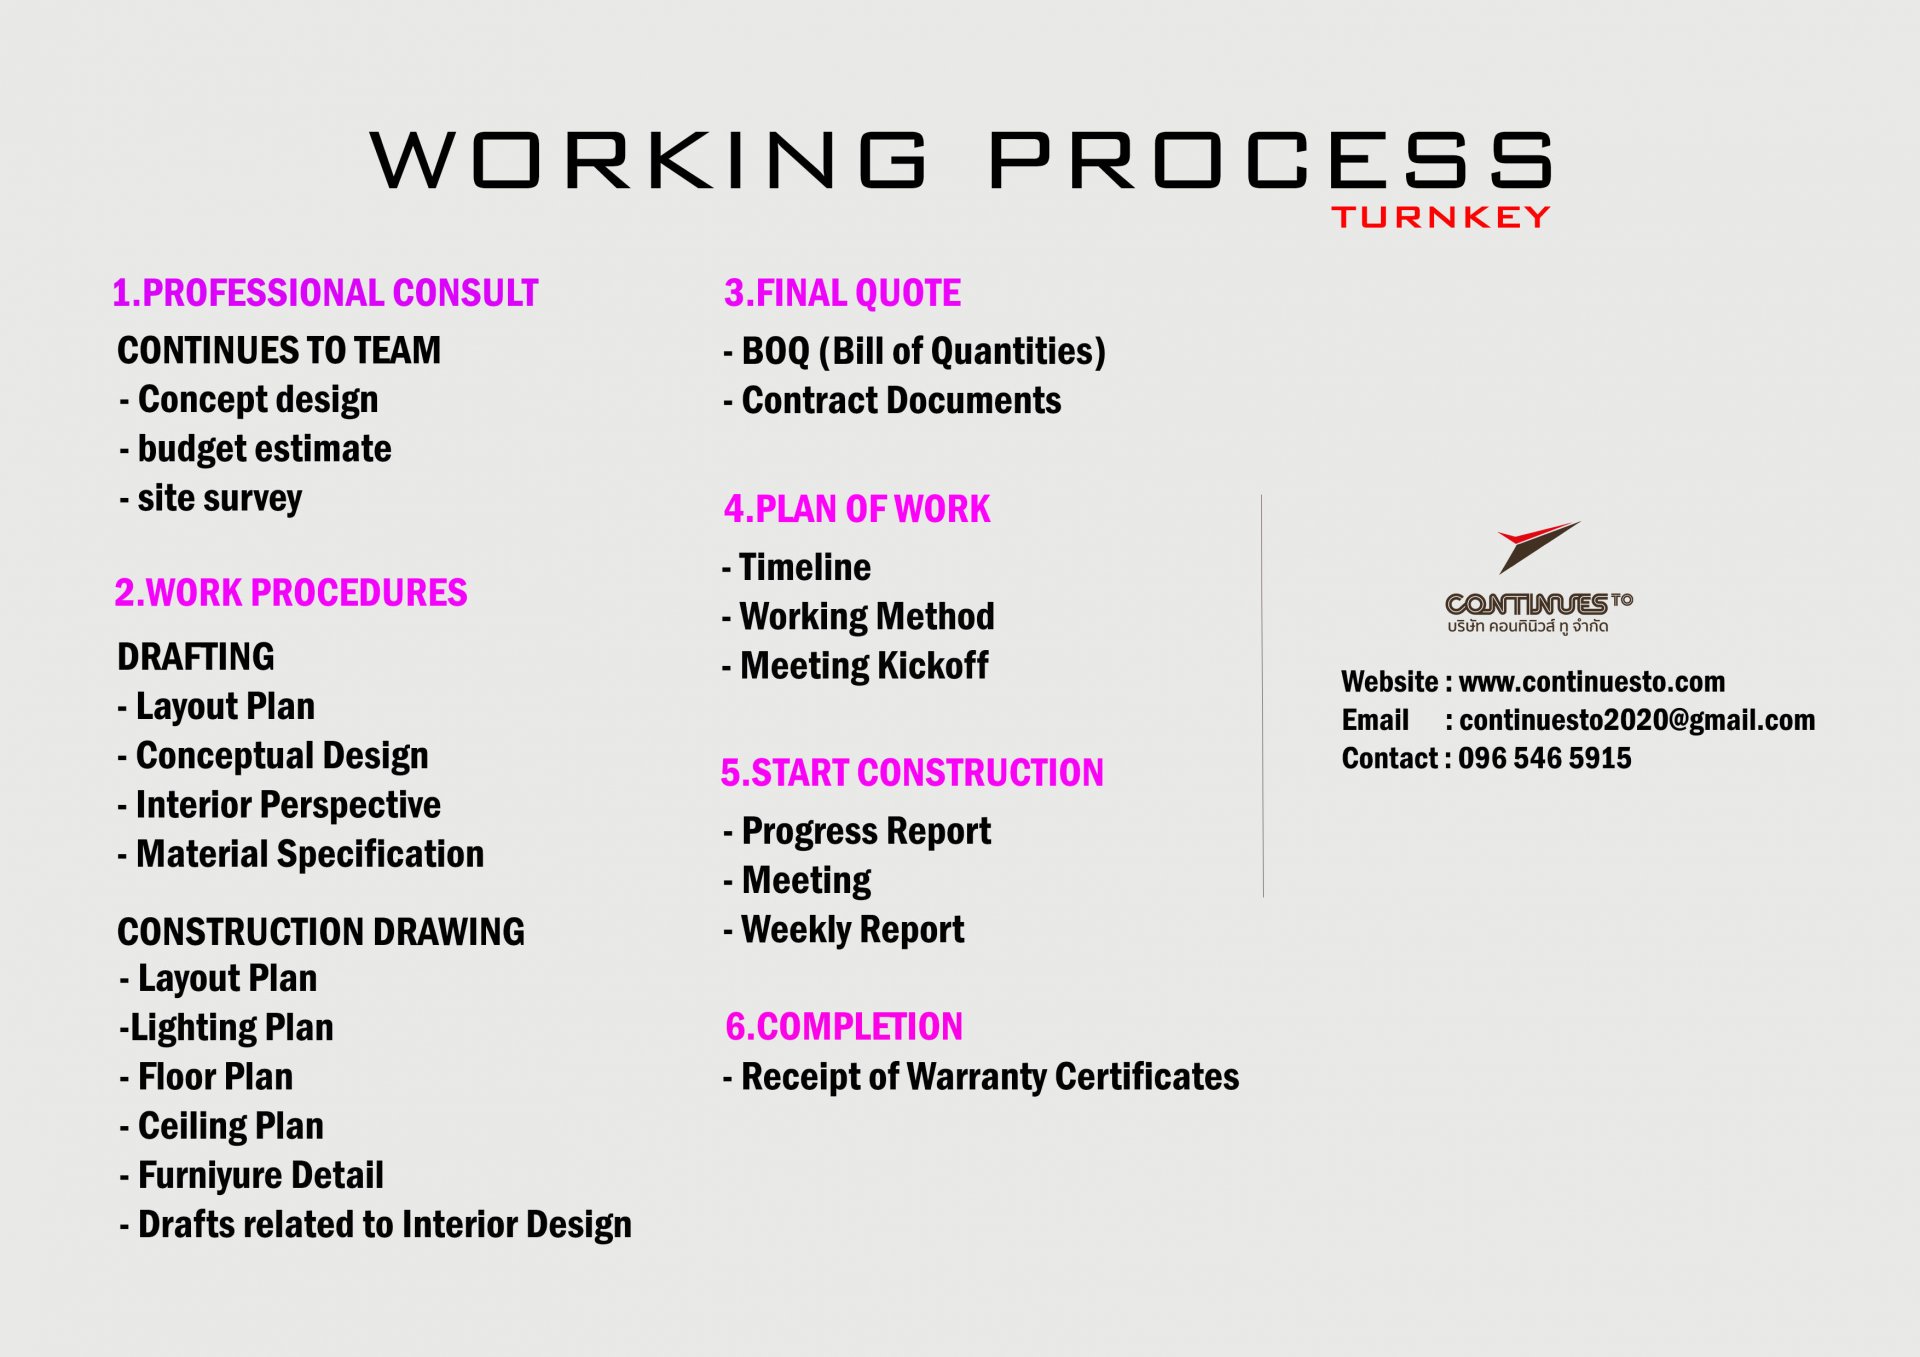 Working Process ( Turnkey)